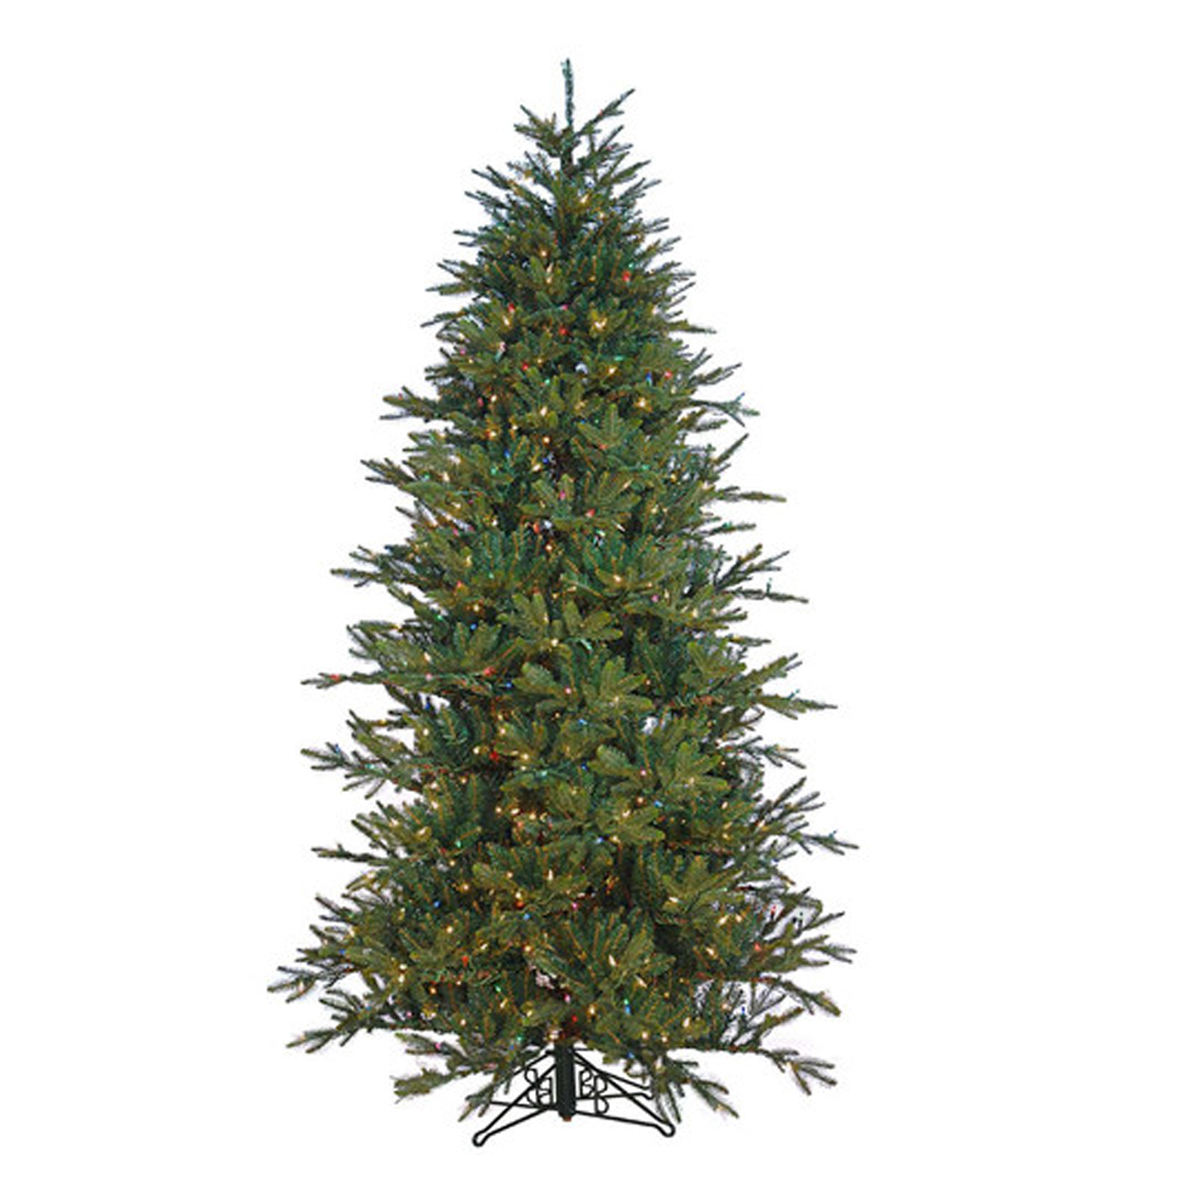 Alaskan Deluxe Christmas Tree - Slim Frame - Warm White Glow LED Lights - One-Plug Pole - 12ft Tall